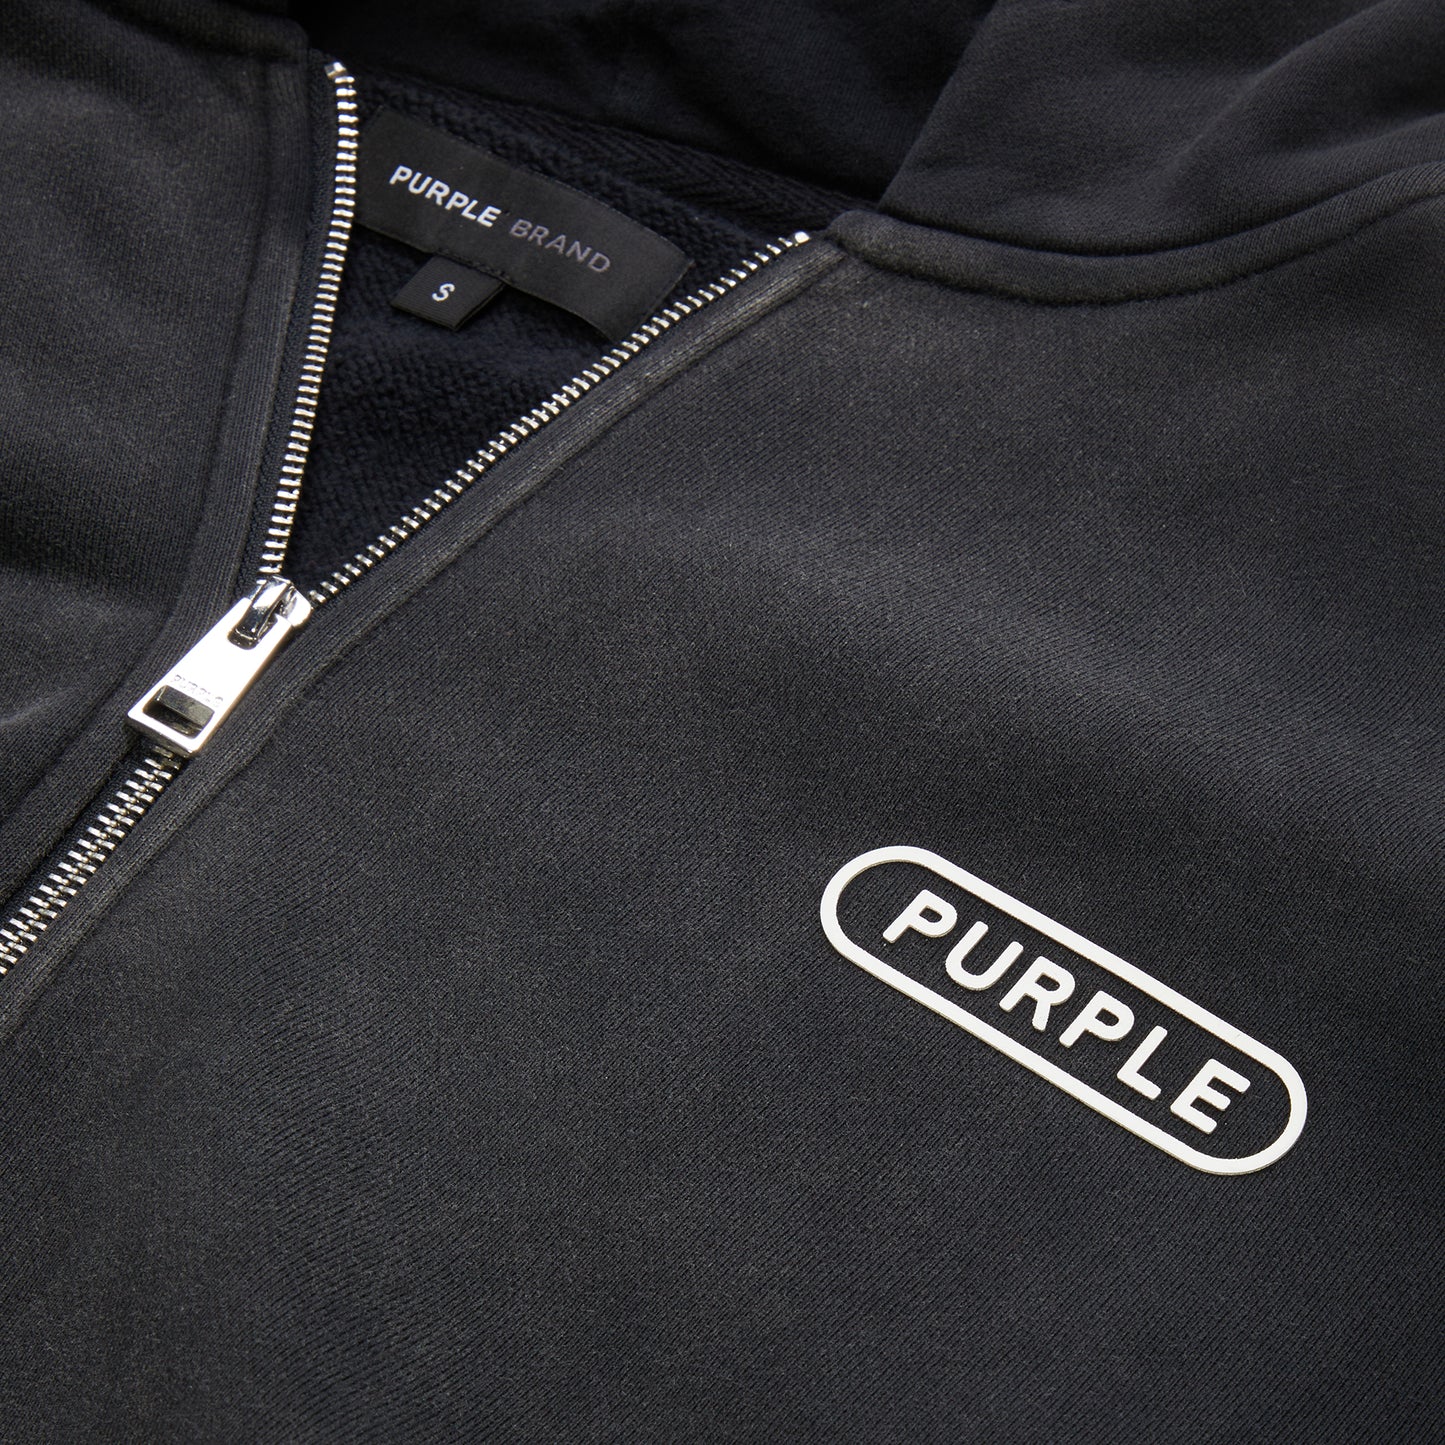 PURPLE Brand HWT Fleece Full Zip Hoody (Black)